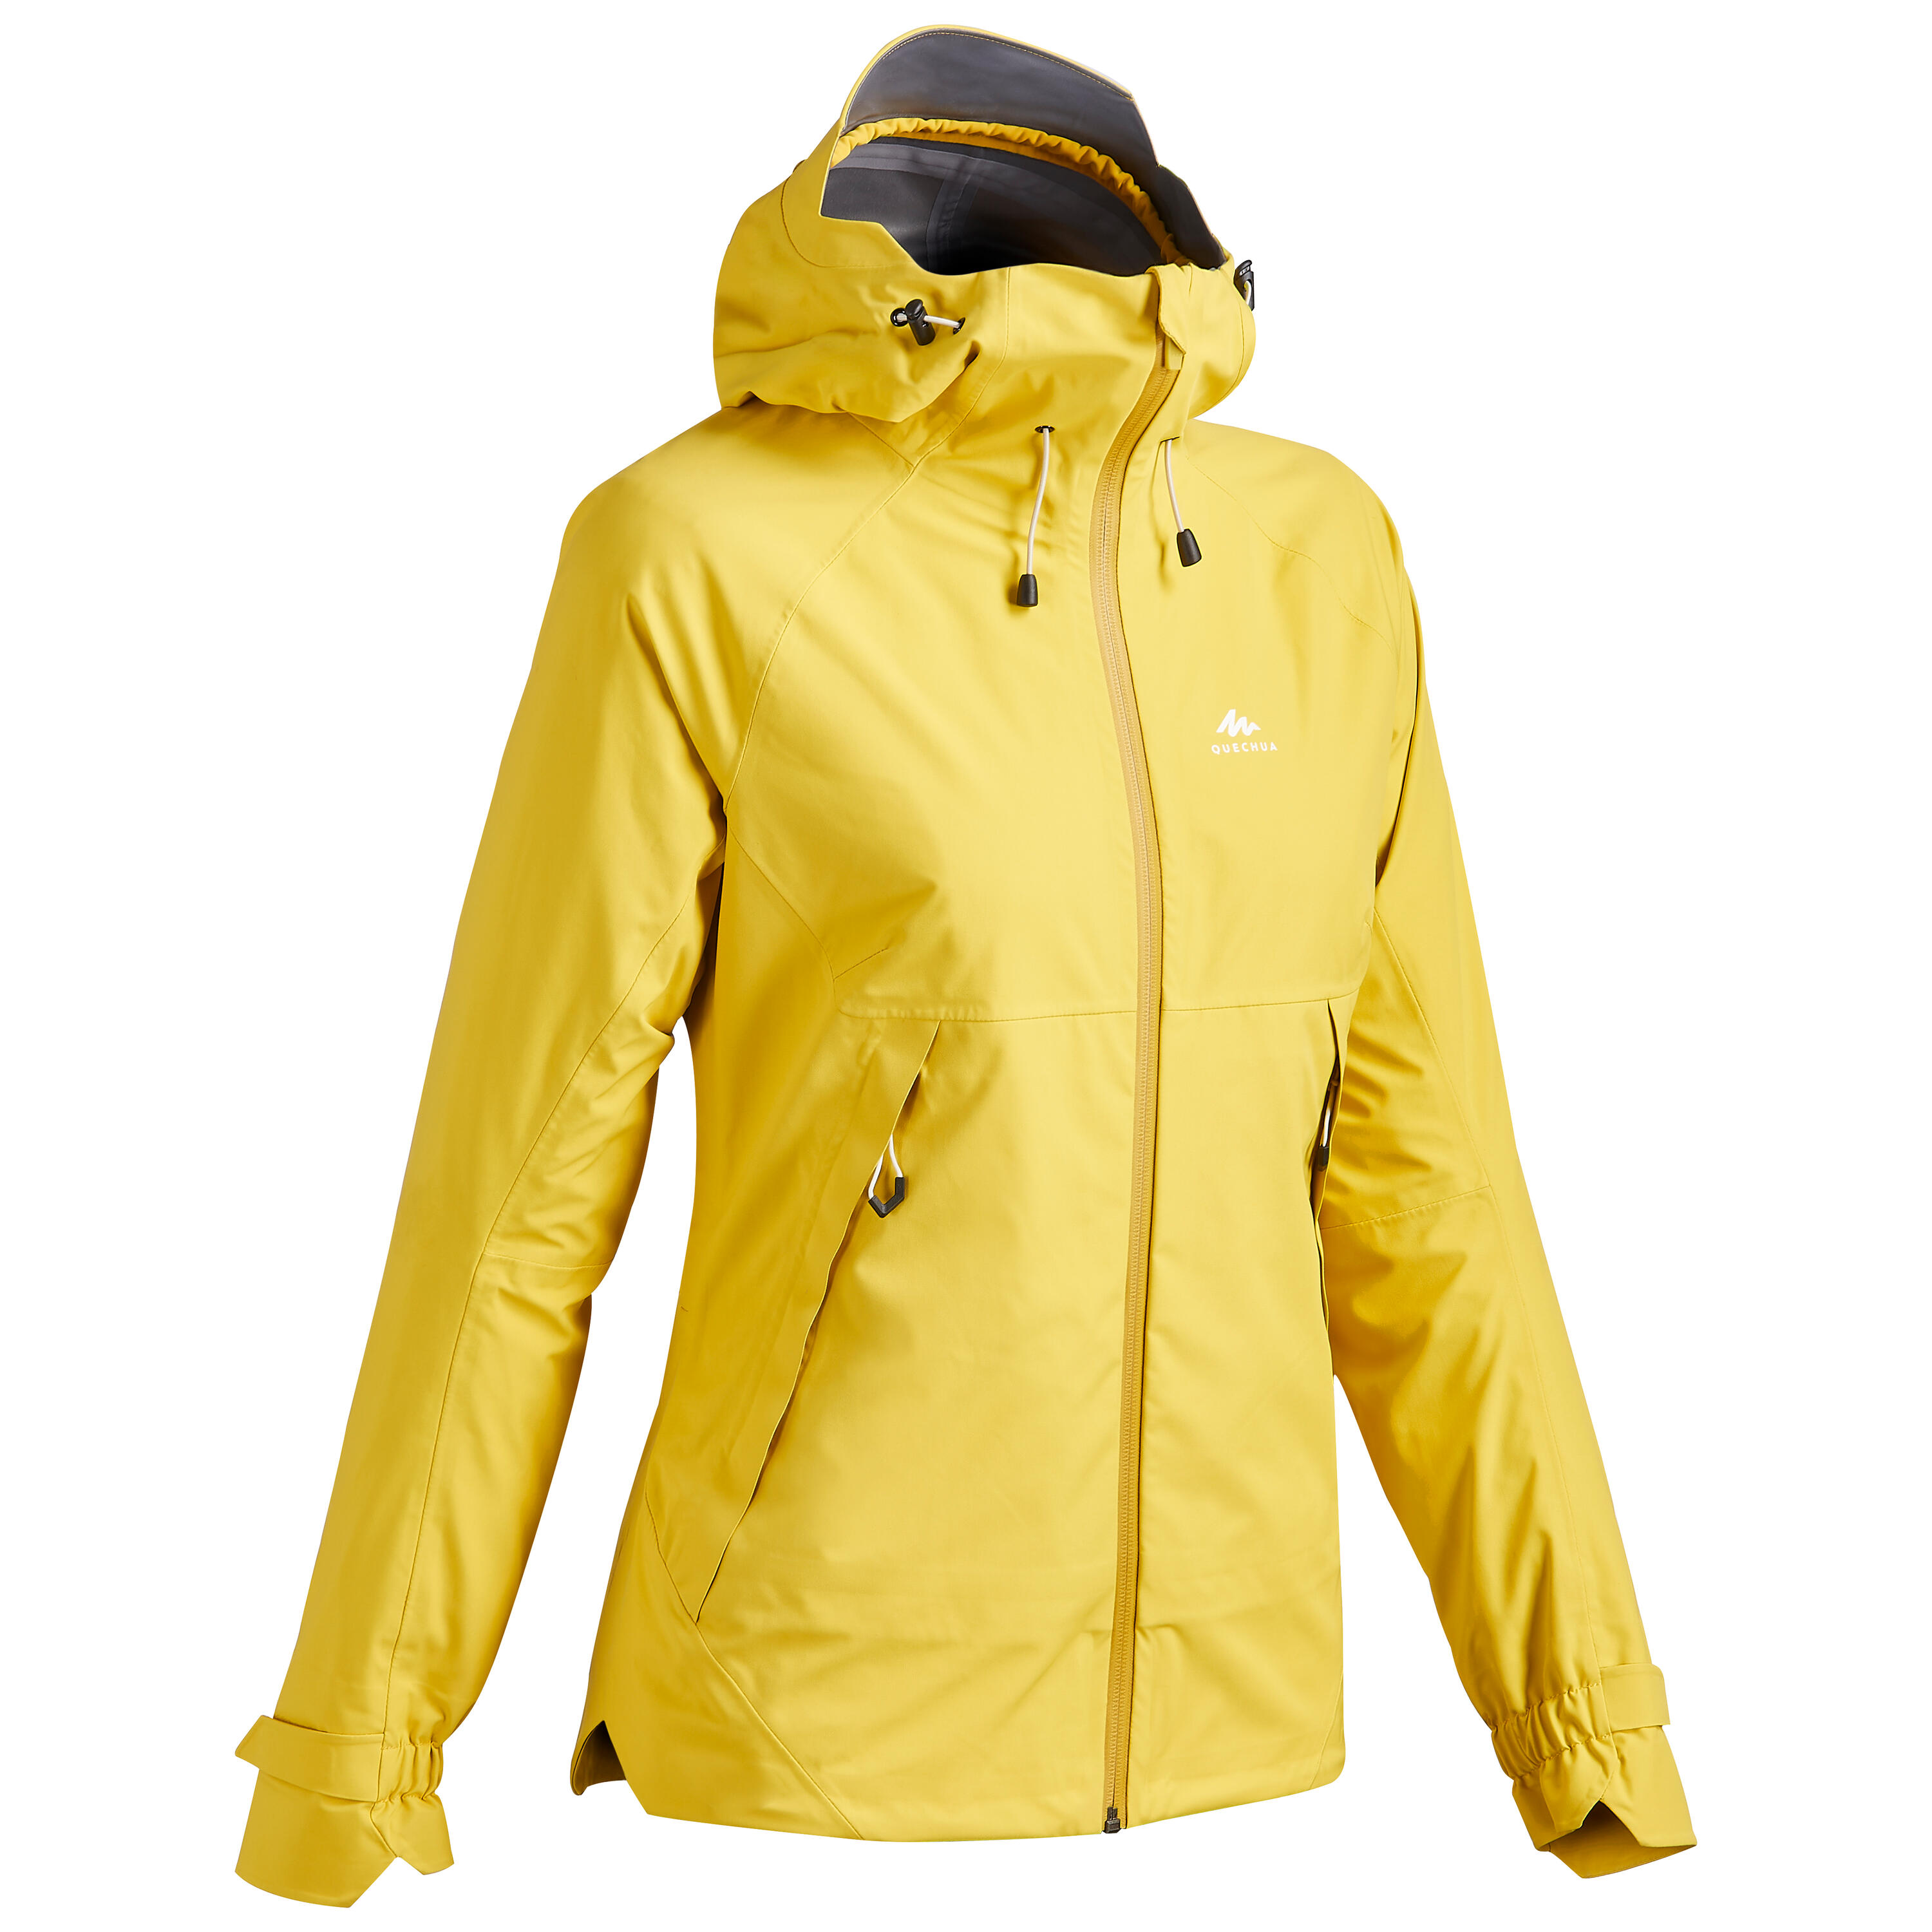 Waterproof Jackets and Coats